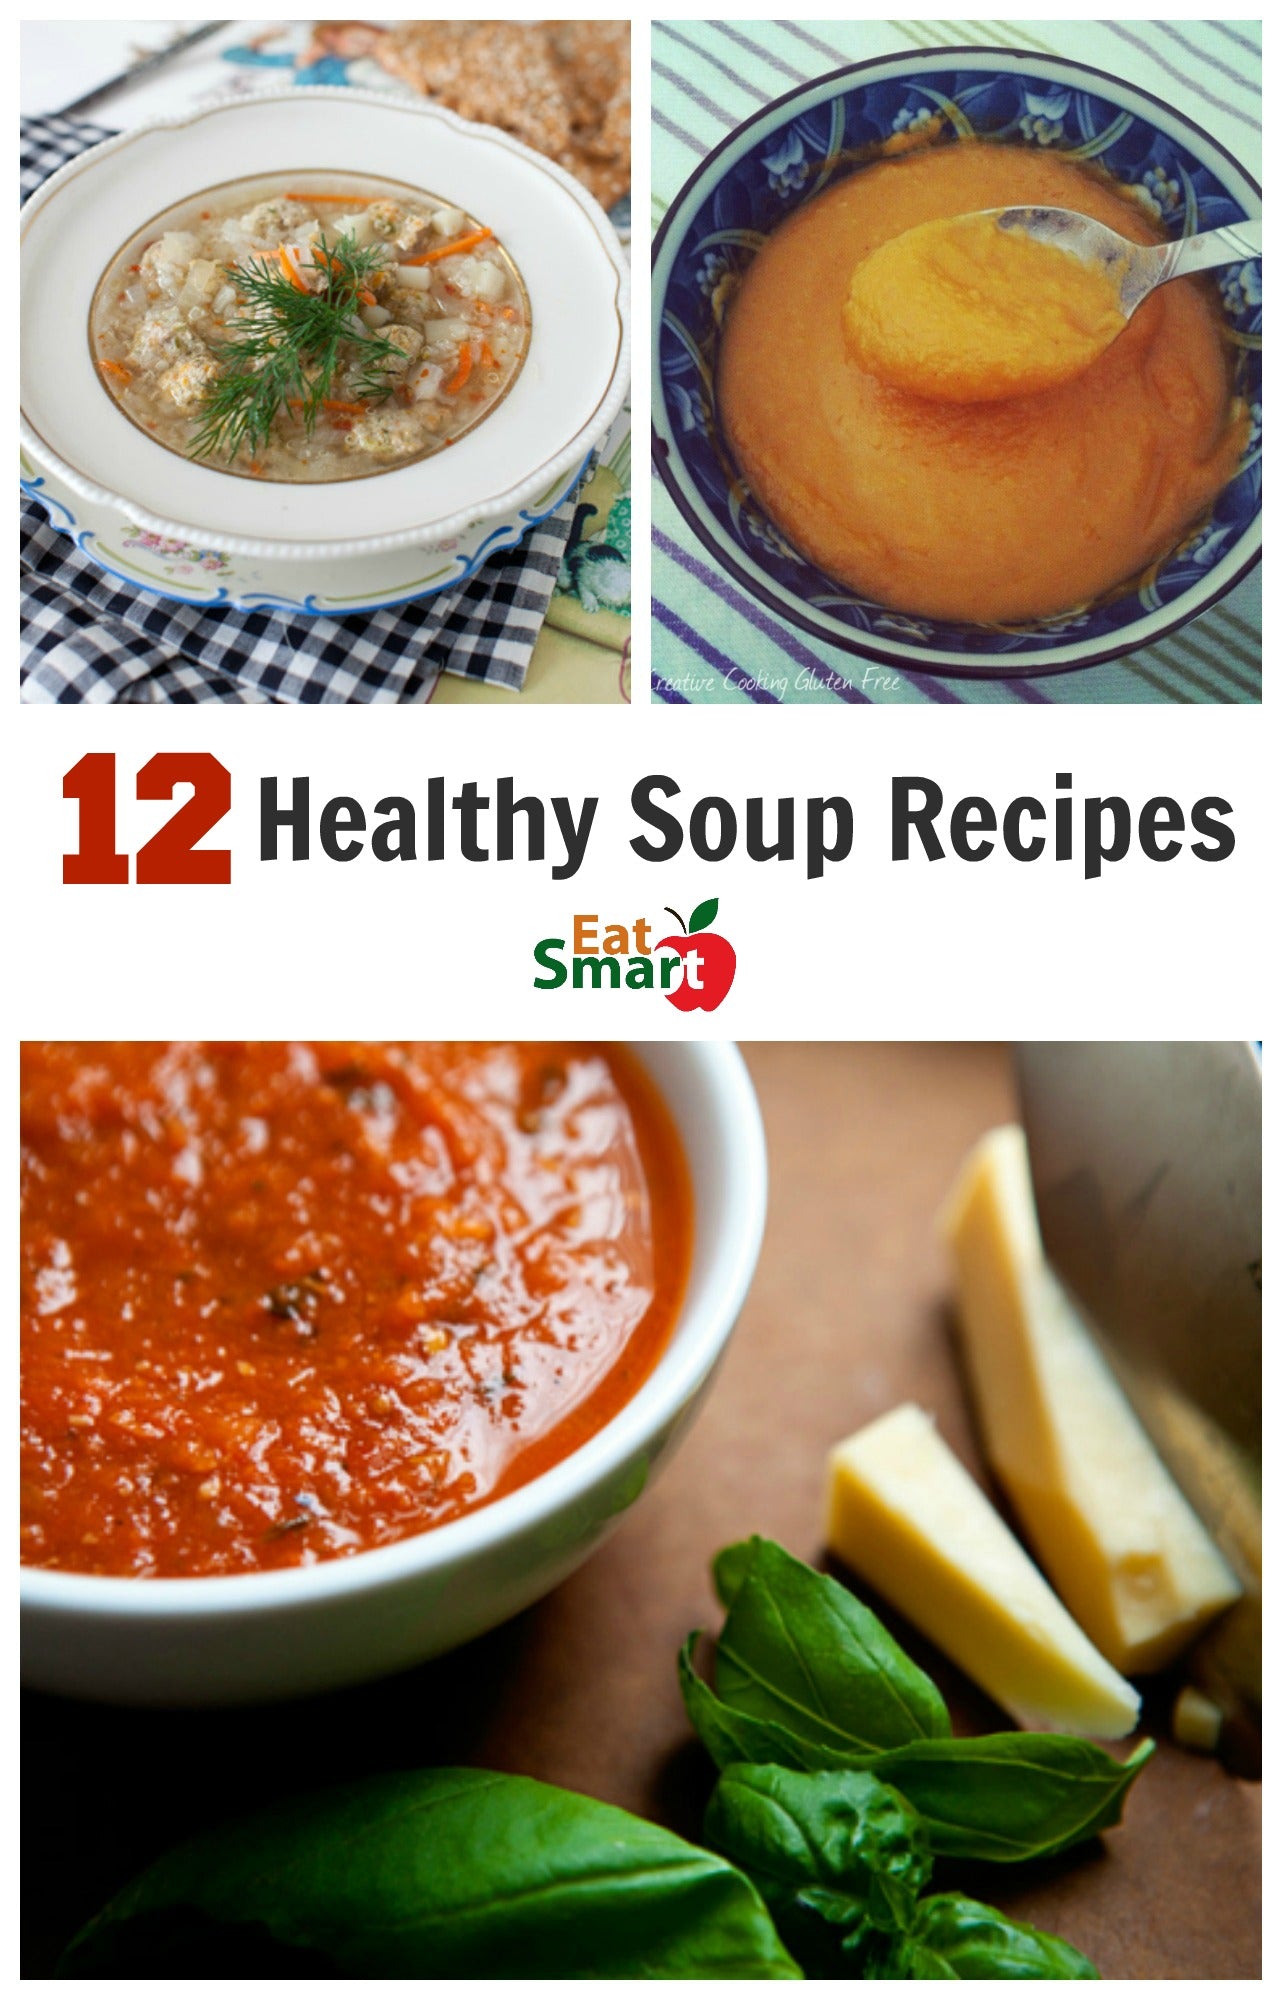 12 Healthy Soup Recipes